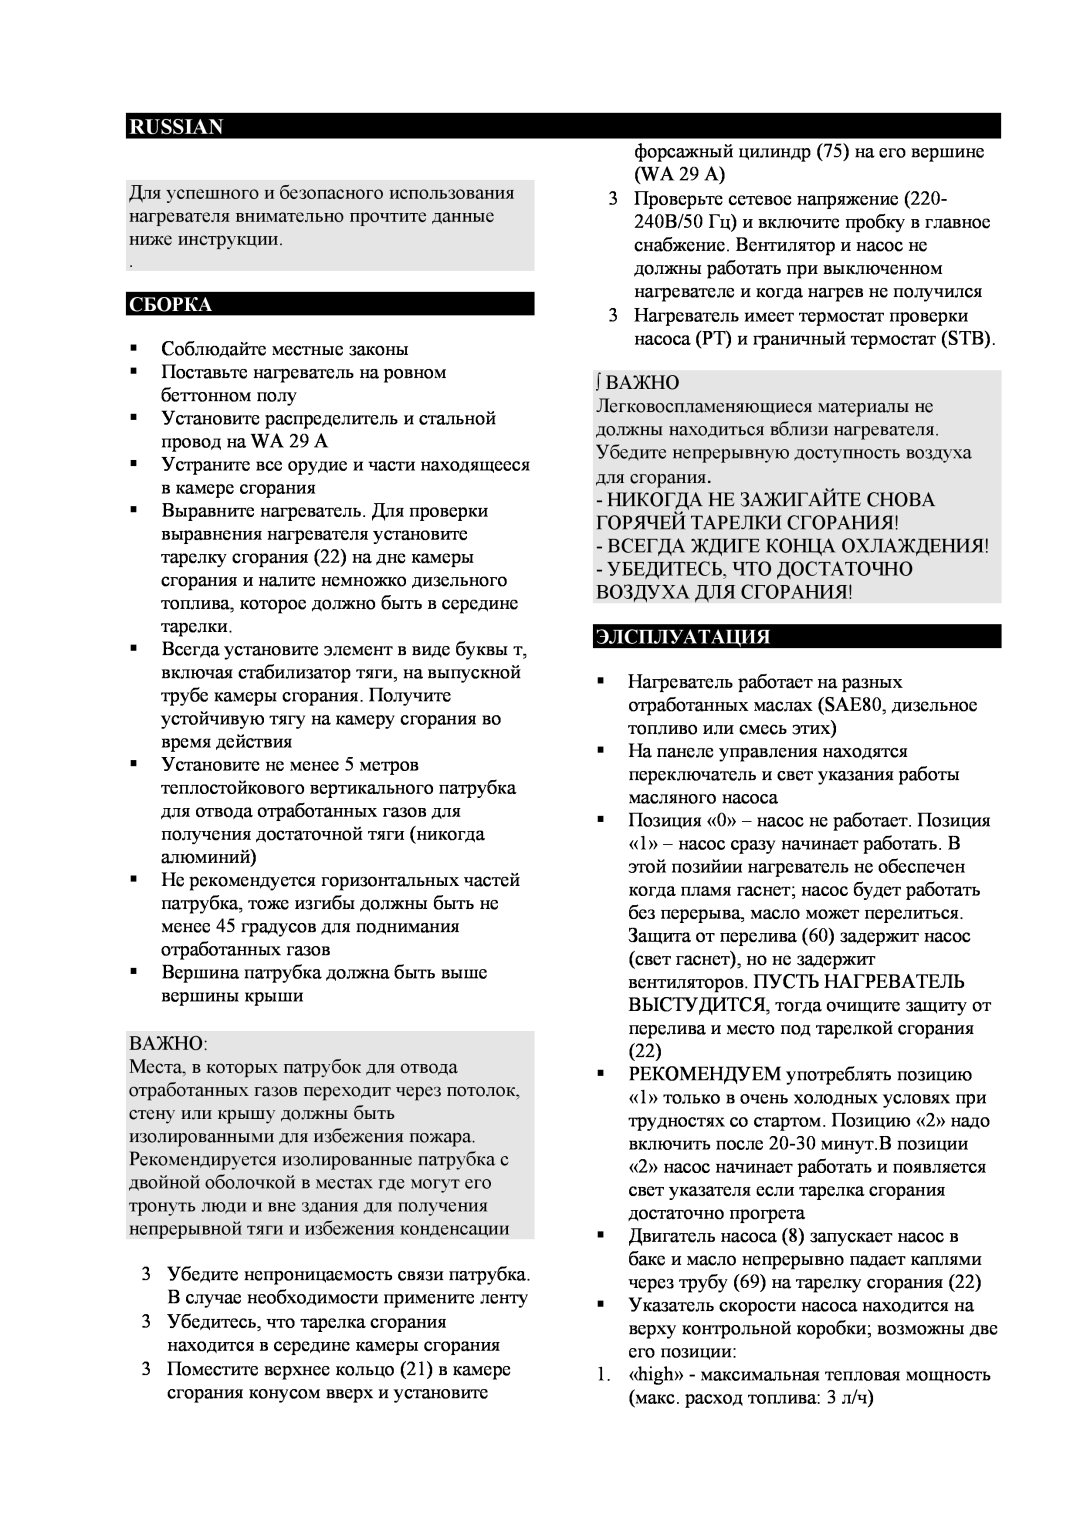 Master Lock WA 29 A user manual Russian, Cборка, Элсплуатация 